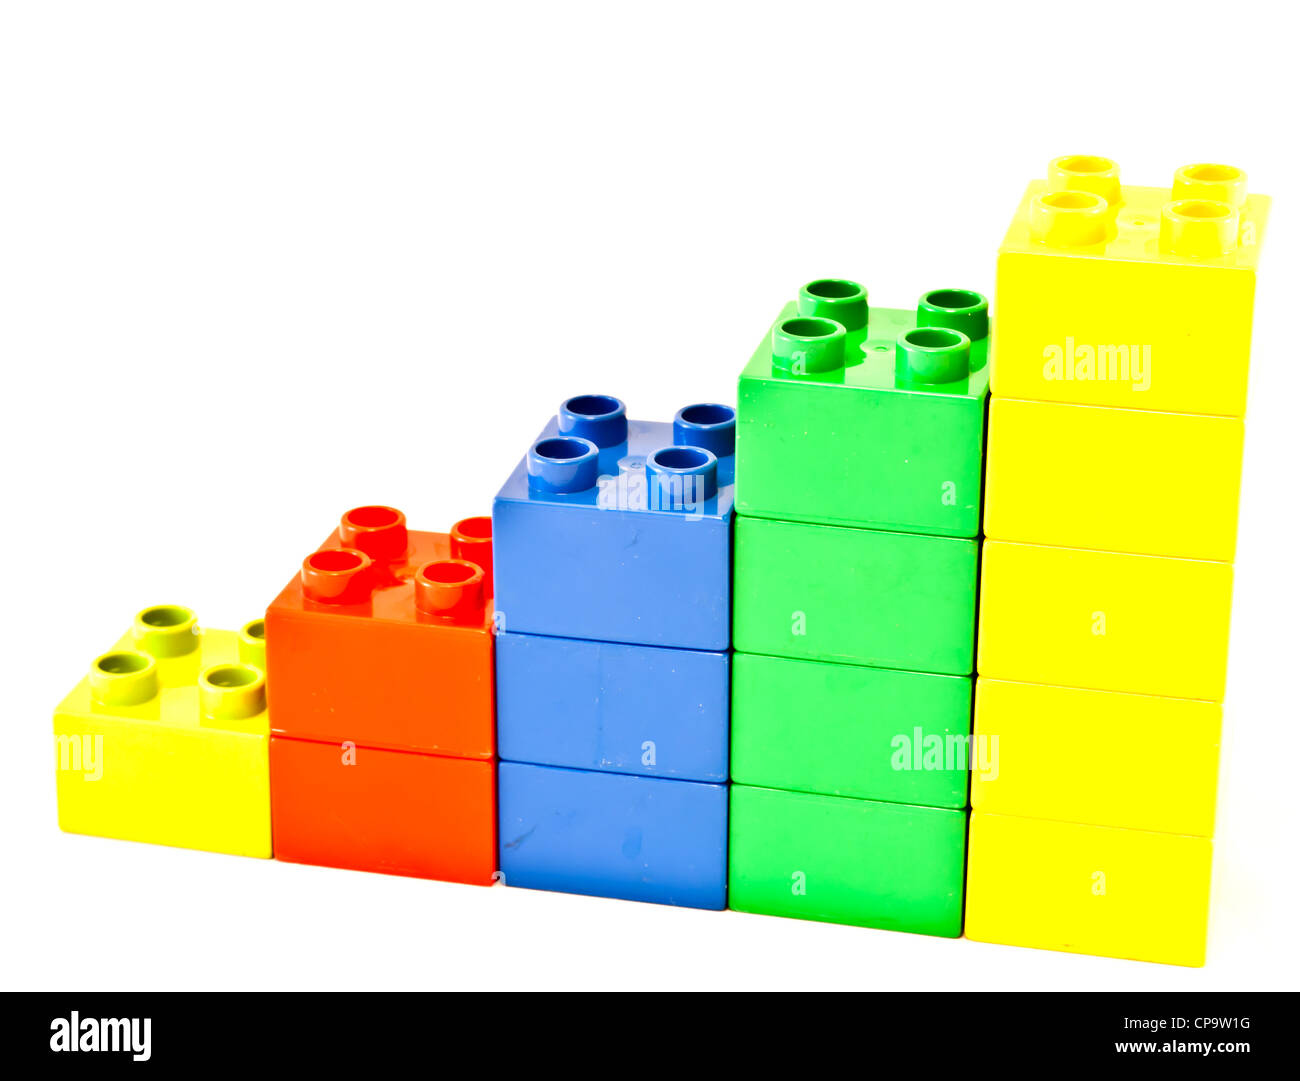 Plastic building blocks on white background. Bright colors. Stock Photo